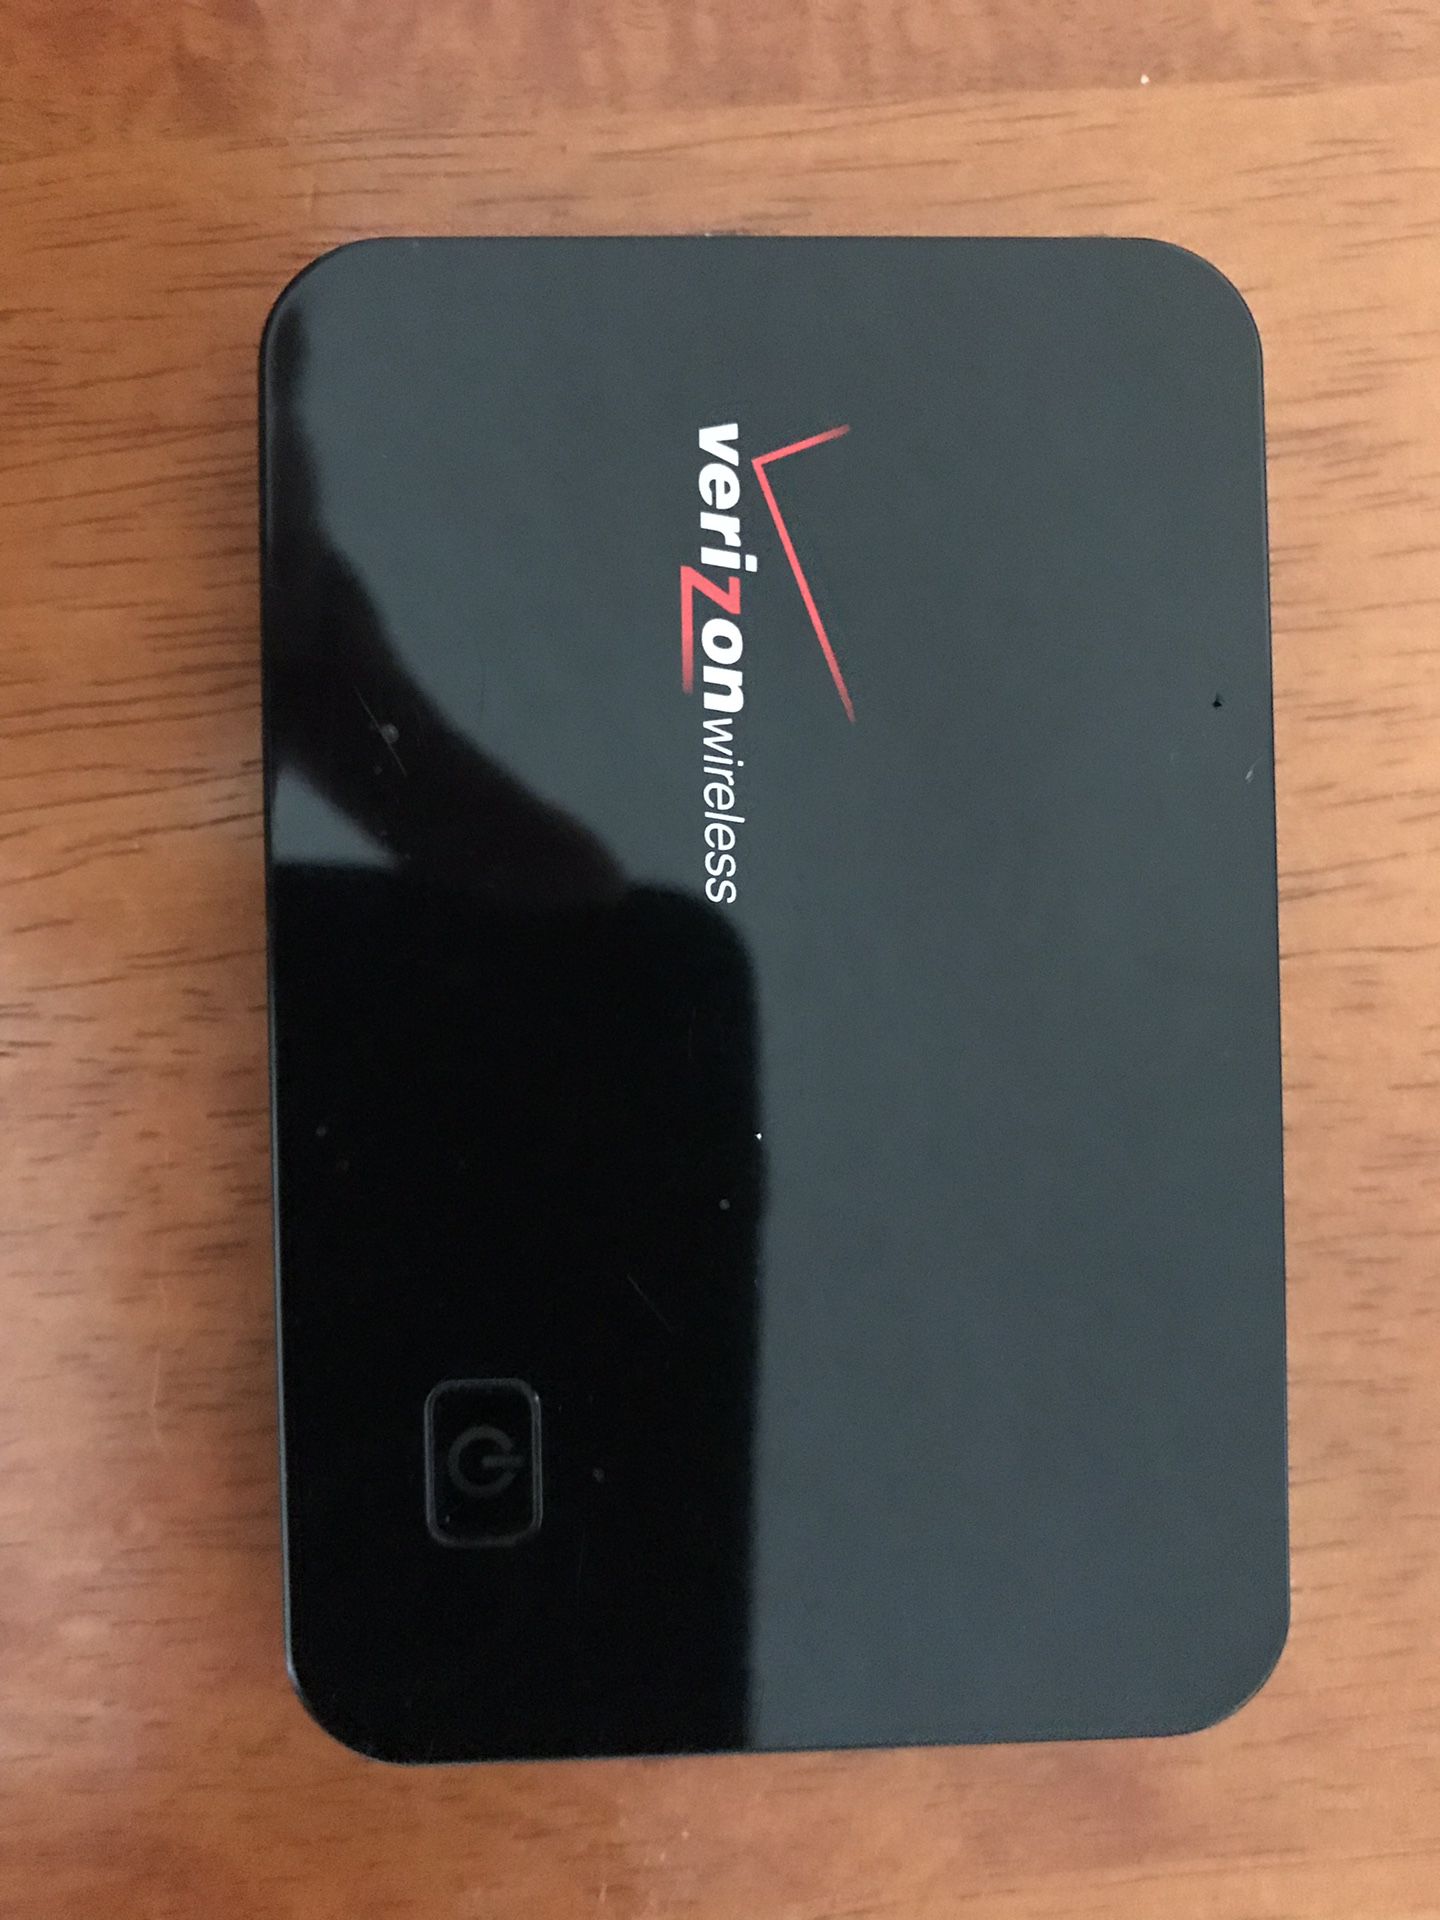 Verizon Wireless MiFi 2200 3G WiFi Mobile Hotspot